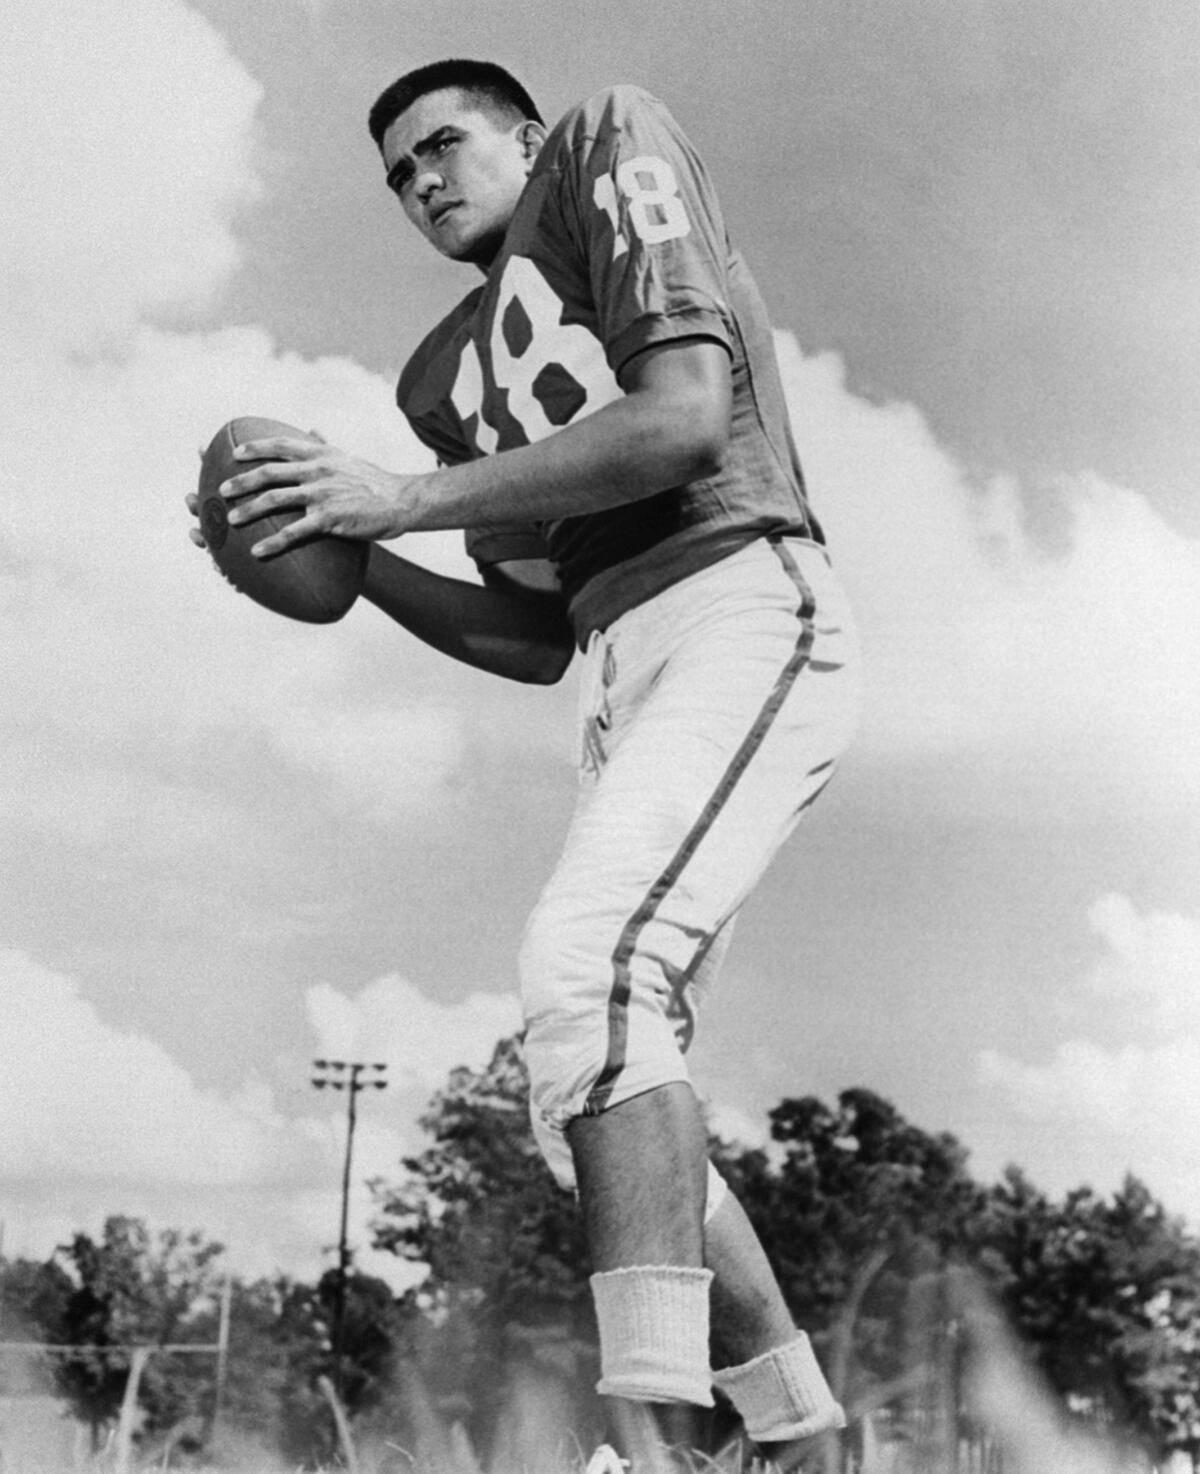 Roman Gabriel as an N.C. State quarterback in 1959.